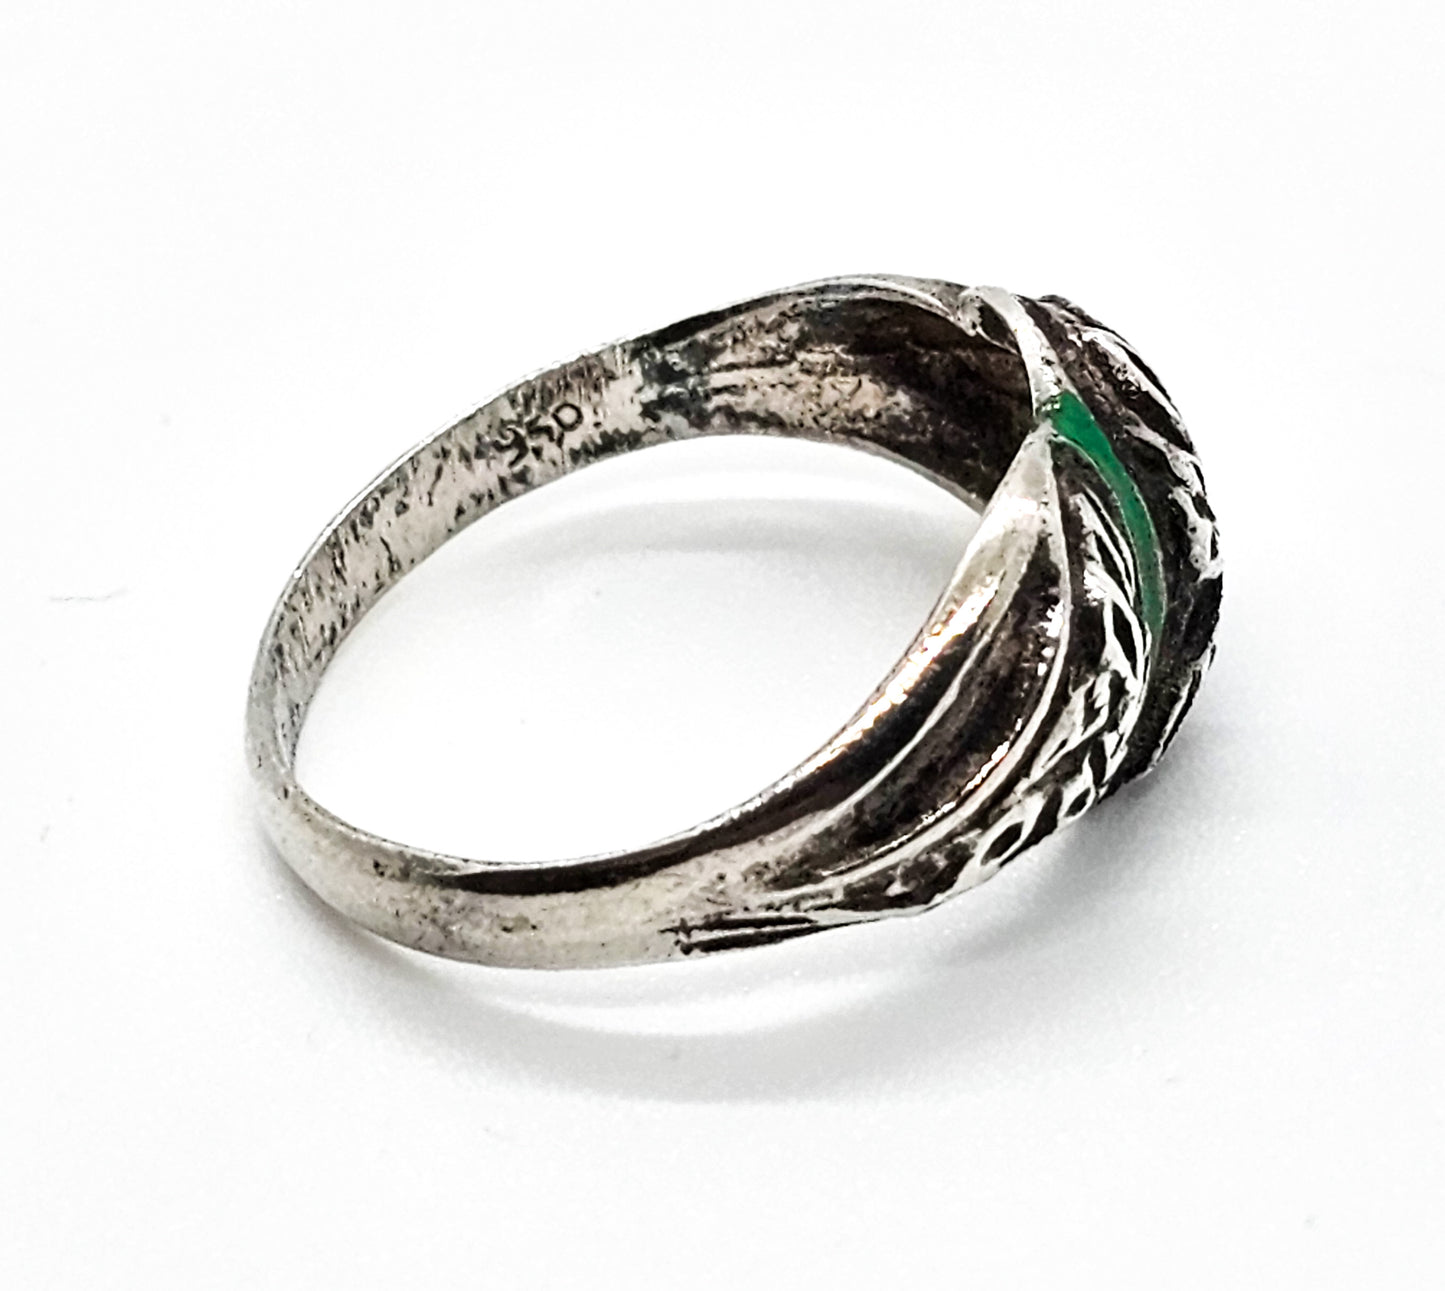 Art Nouveau Repousse  Forget me knot green enamel antique sterling silver ring size 8